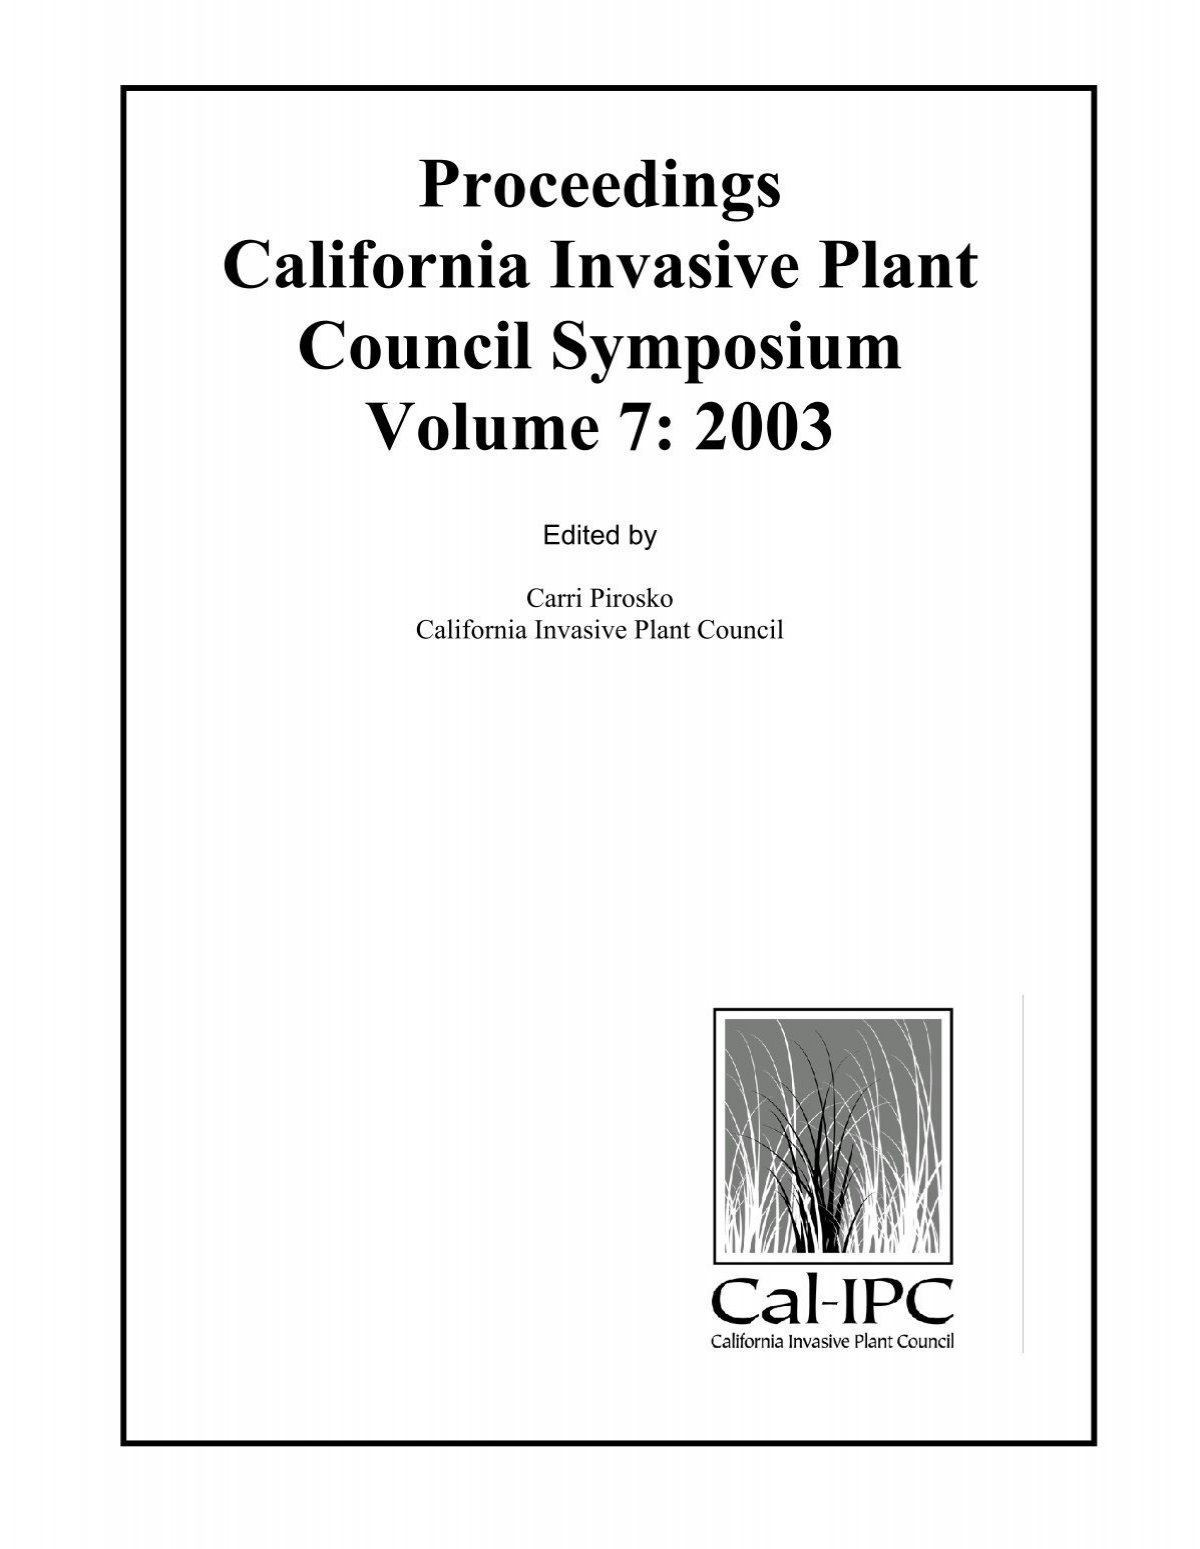 Proceedings California Invasive Plant Council Symposium - Cal-IPC